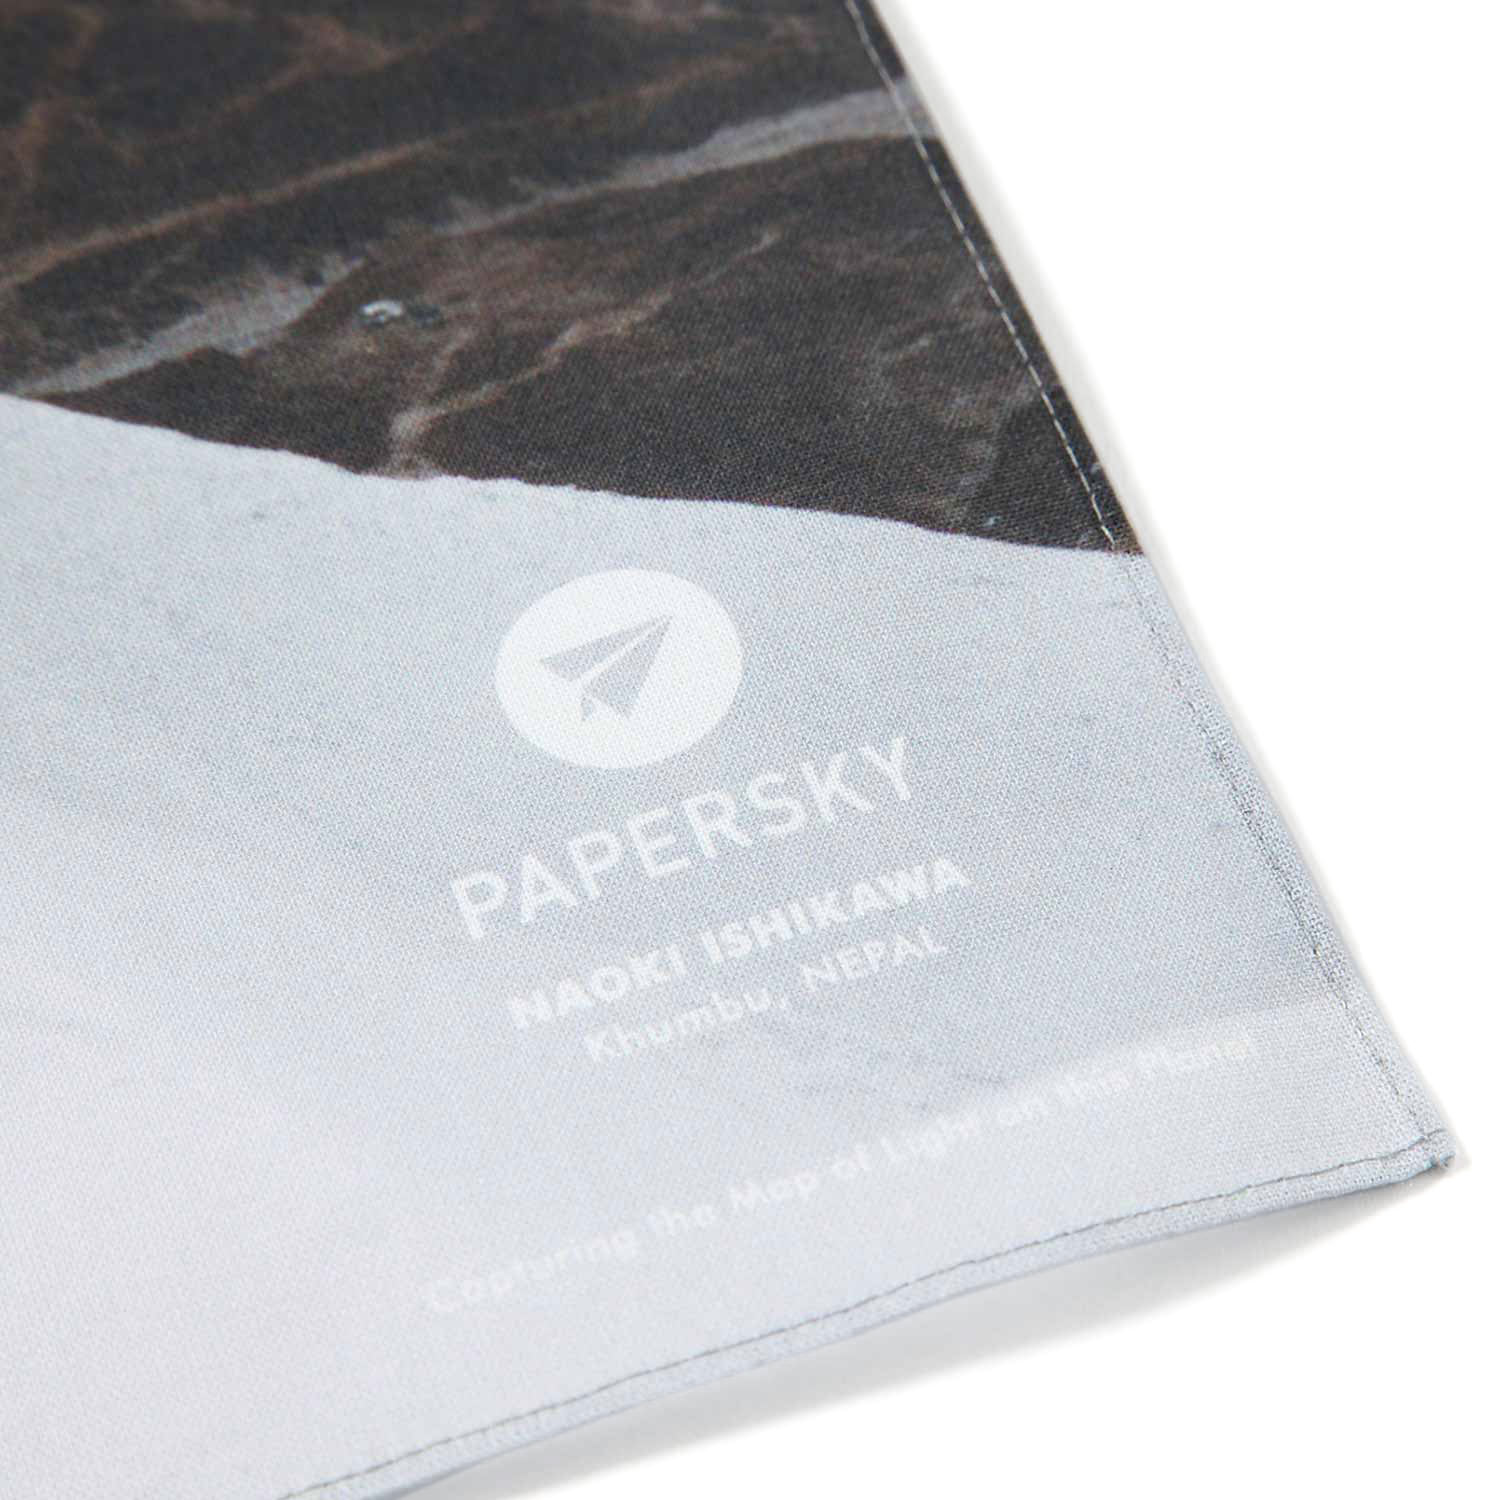 PAPERSKY Mountain Bandana ペーパースカイ マウンテンバンダナ ハンカチ スカーフ 綿100% メンズ レディース 日本製 お弁当包み 大判ハンカチ ギフト 3